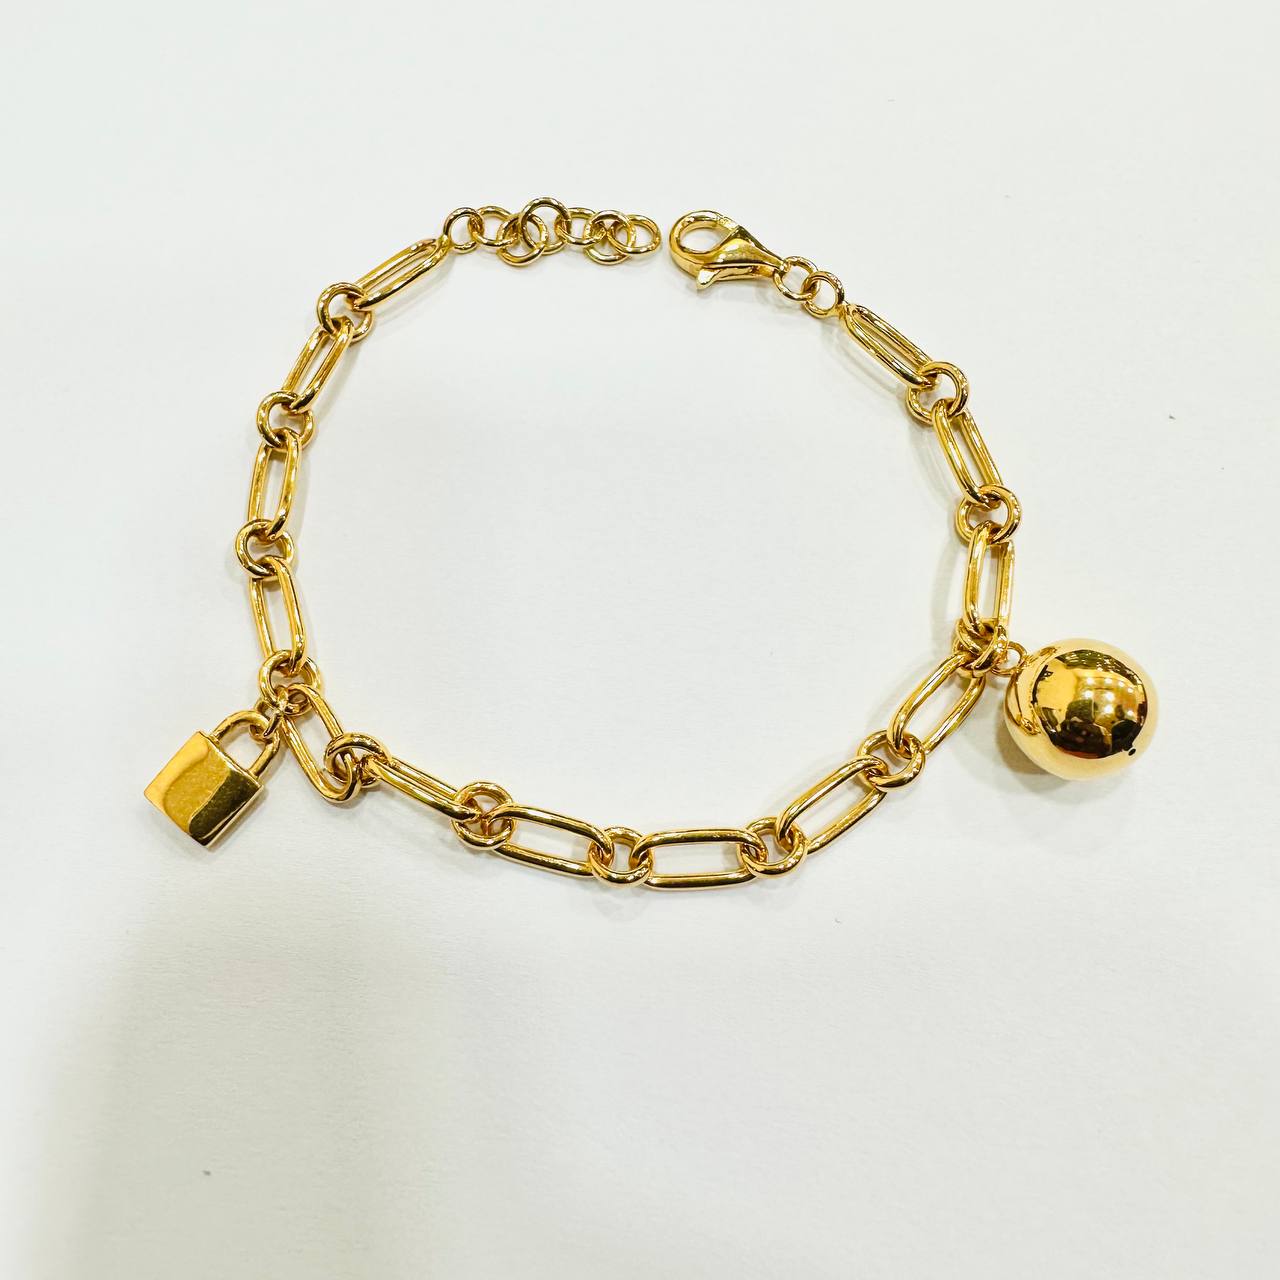 22k / 916 Gold Clip design with Ball and Lock bracelet-916 gold-Best Gold Shop